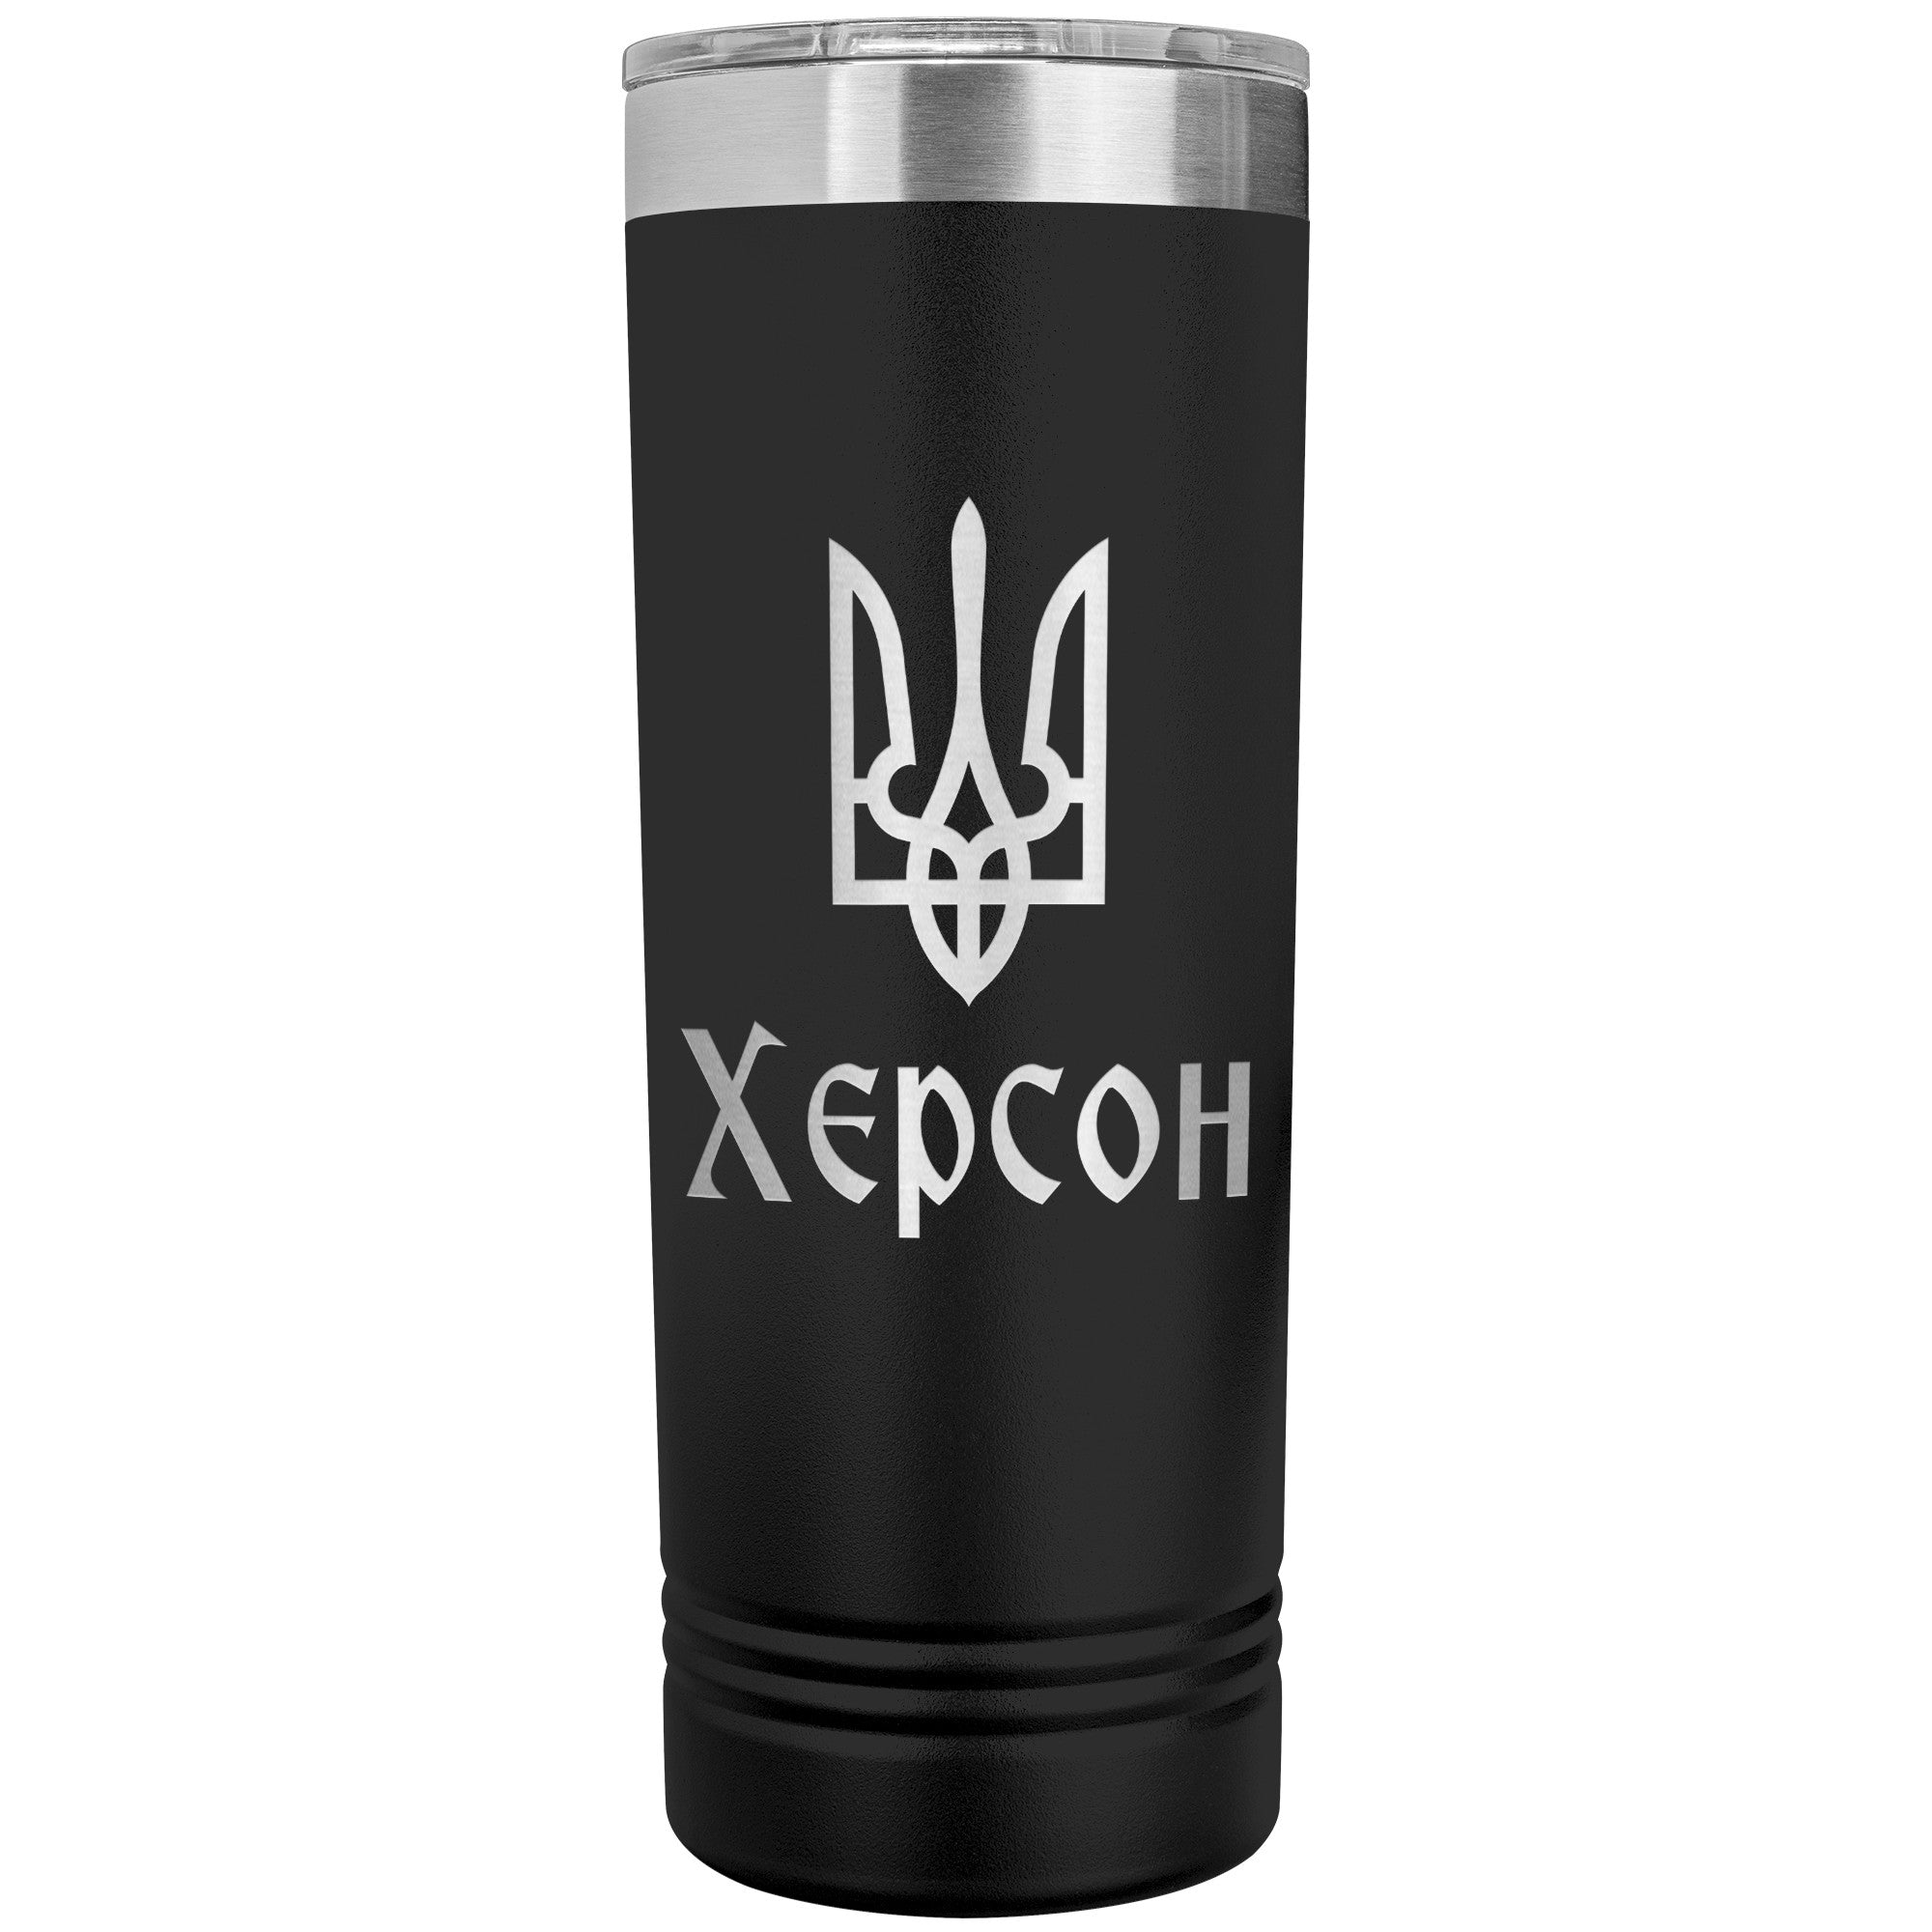 Kherson - 22oz Insulated Skinny Tumbler